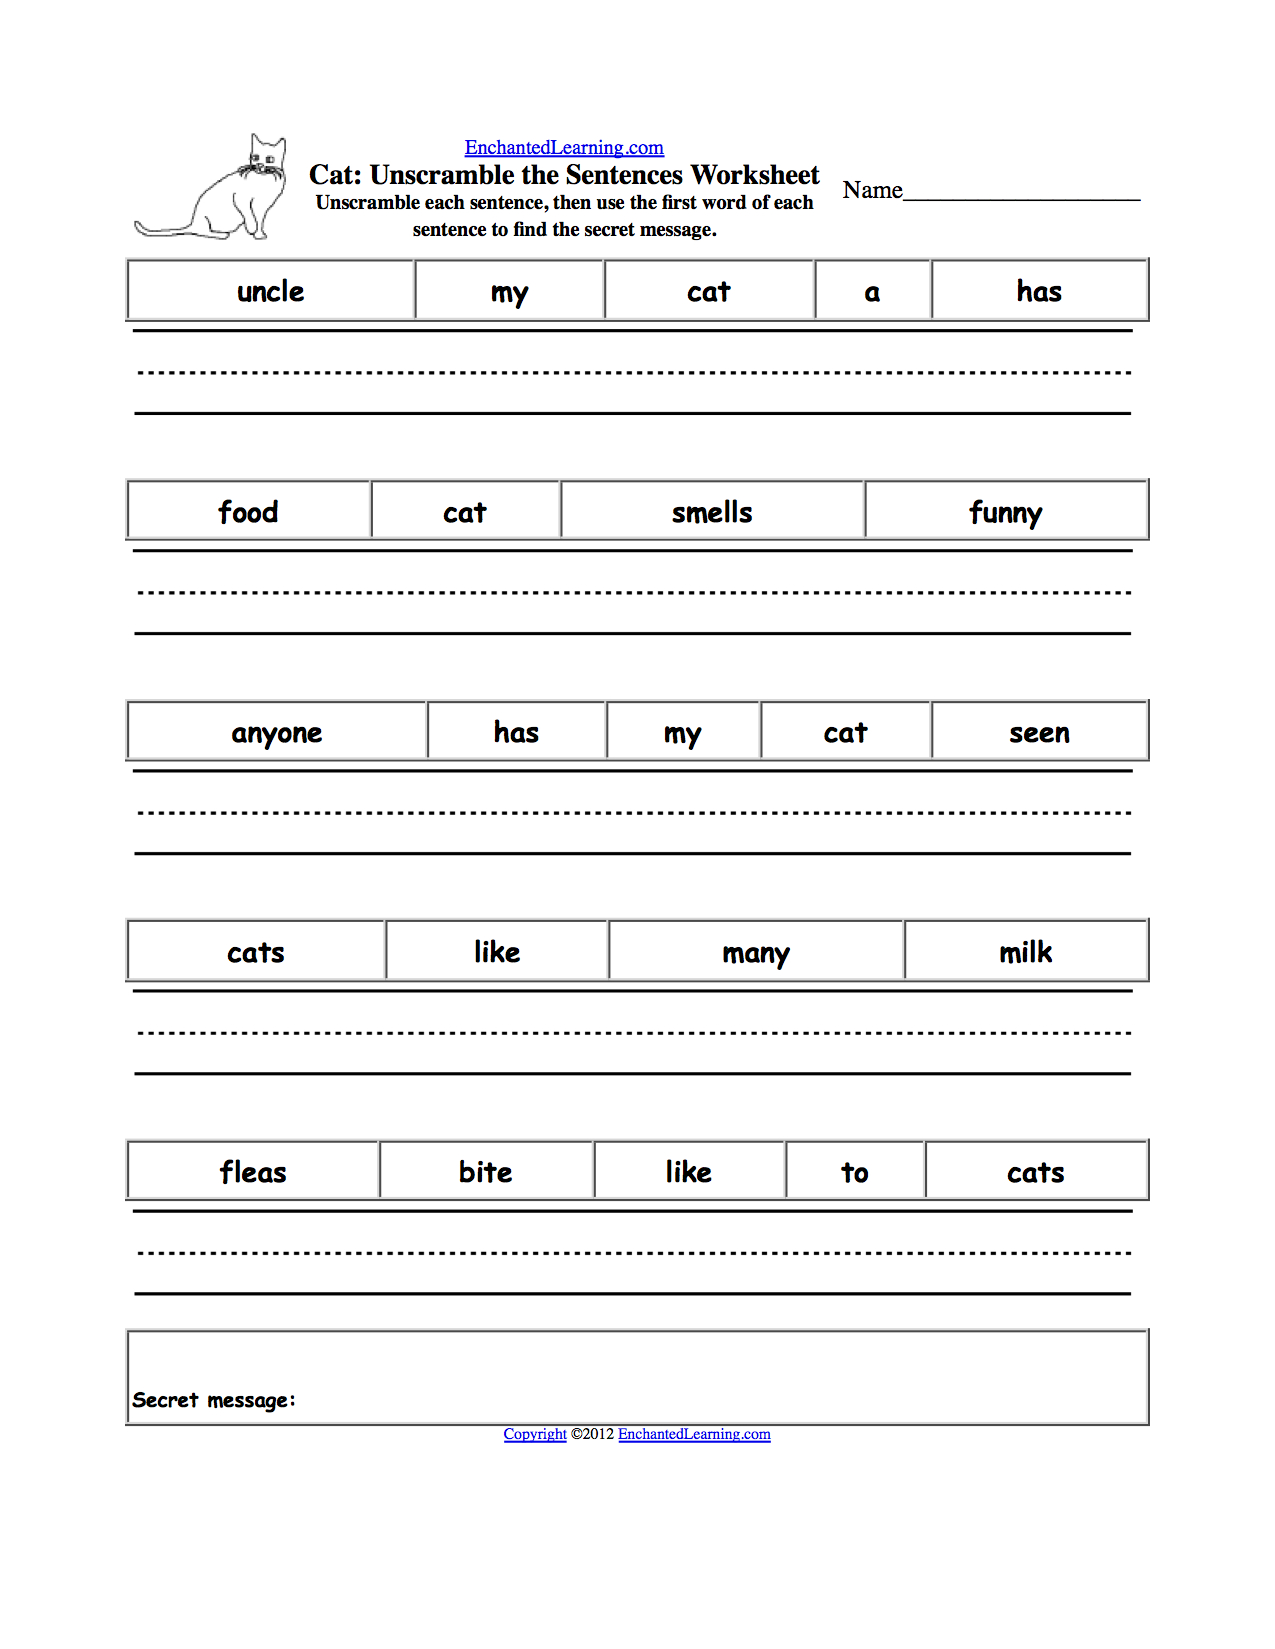 Free Printable Scrambled Sentences Worksheets Free Printable